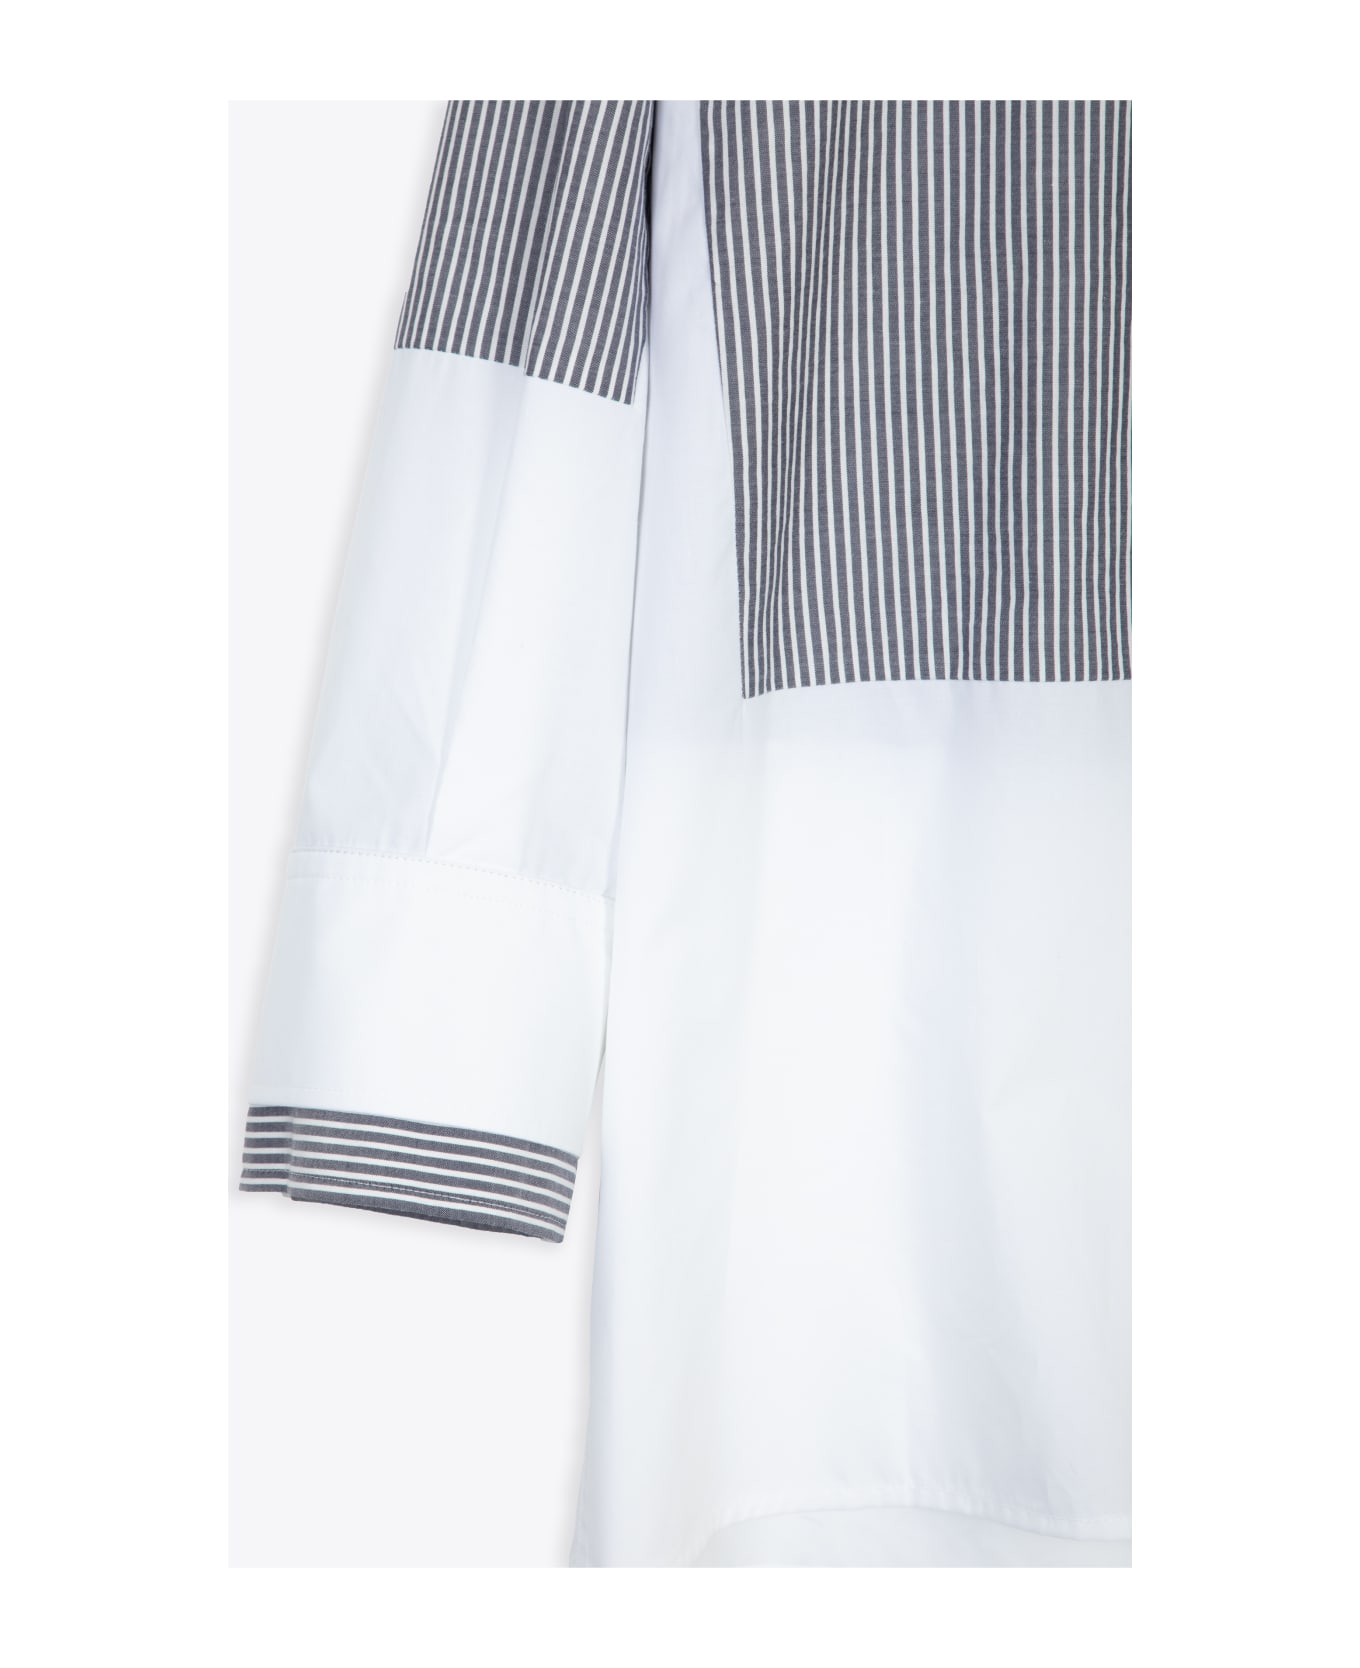 MM6 Maison Margiela Camicia A Maniche Lunghe Cotton Shirt - Bianco/grigio